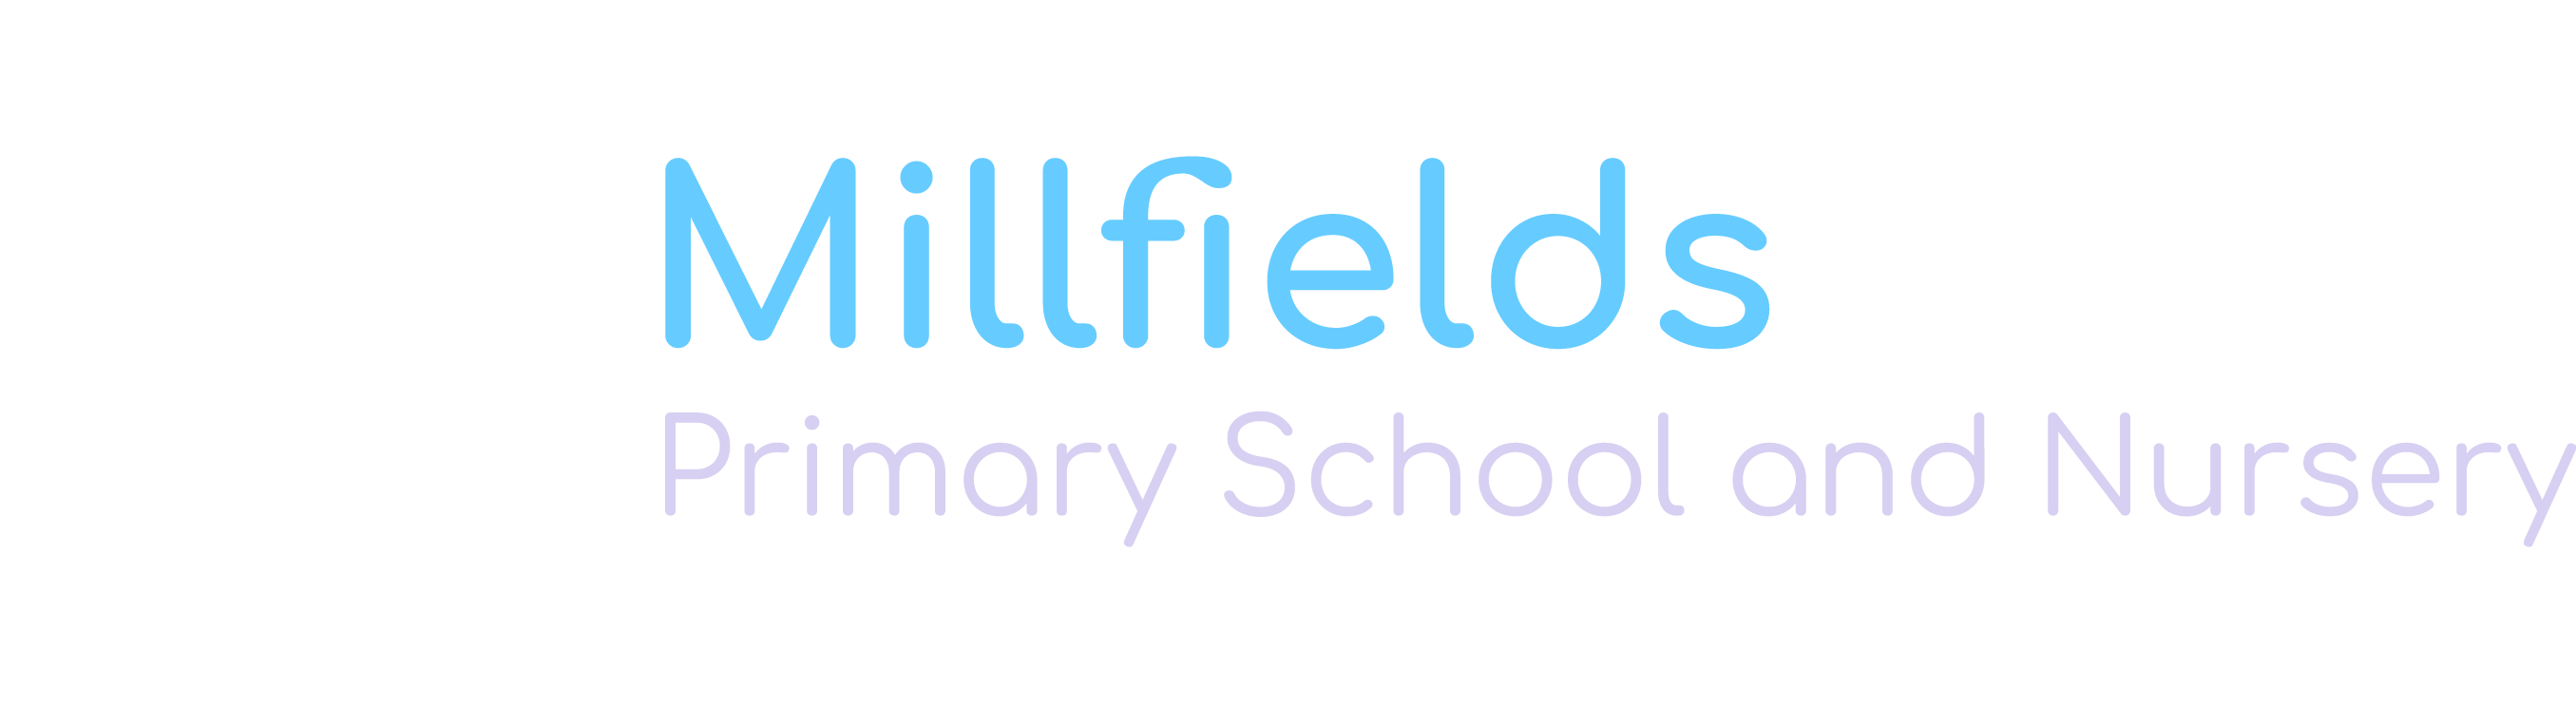 Millfields Primary School and Nursery